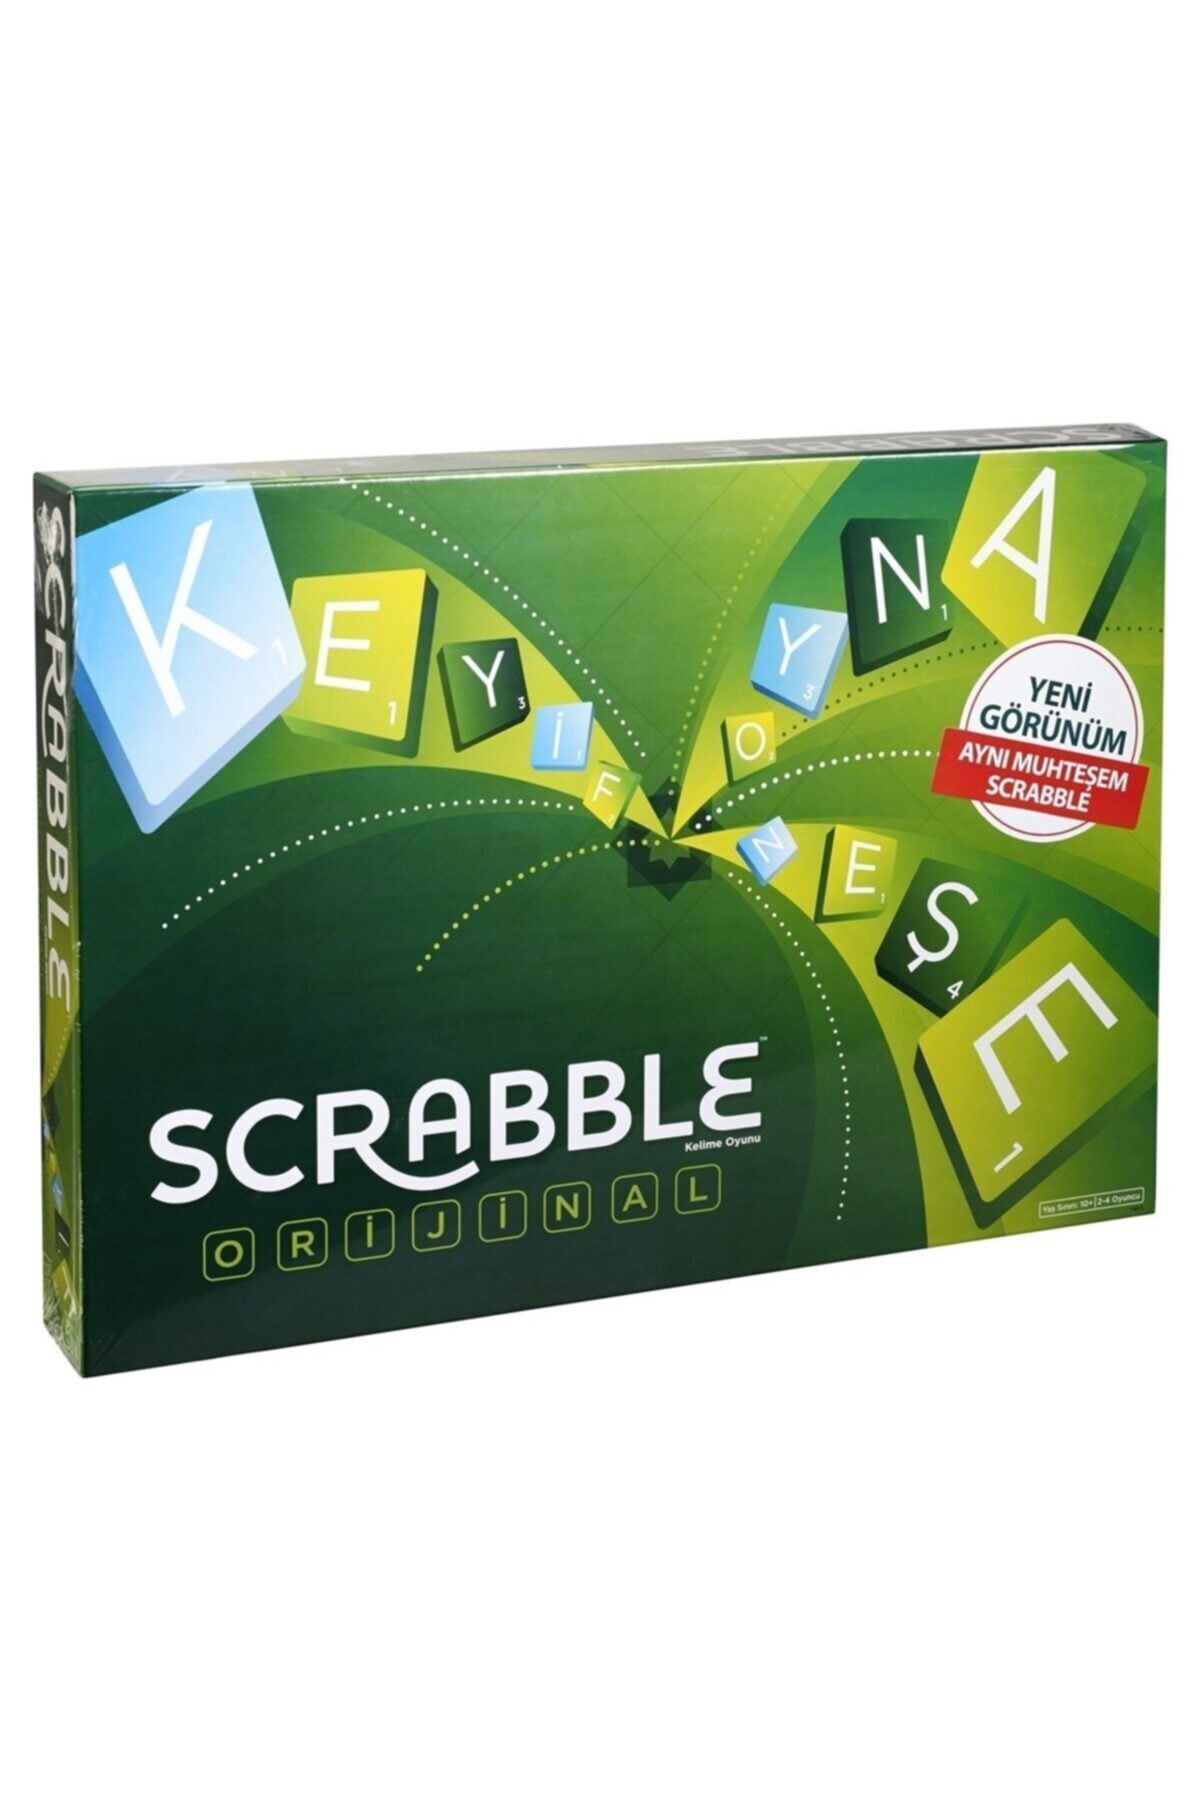 Scrabble Scrabble Orginal Türkçe 10 Yaş Y9611